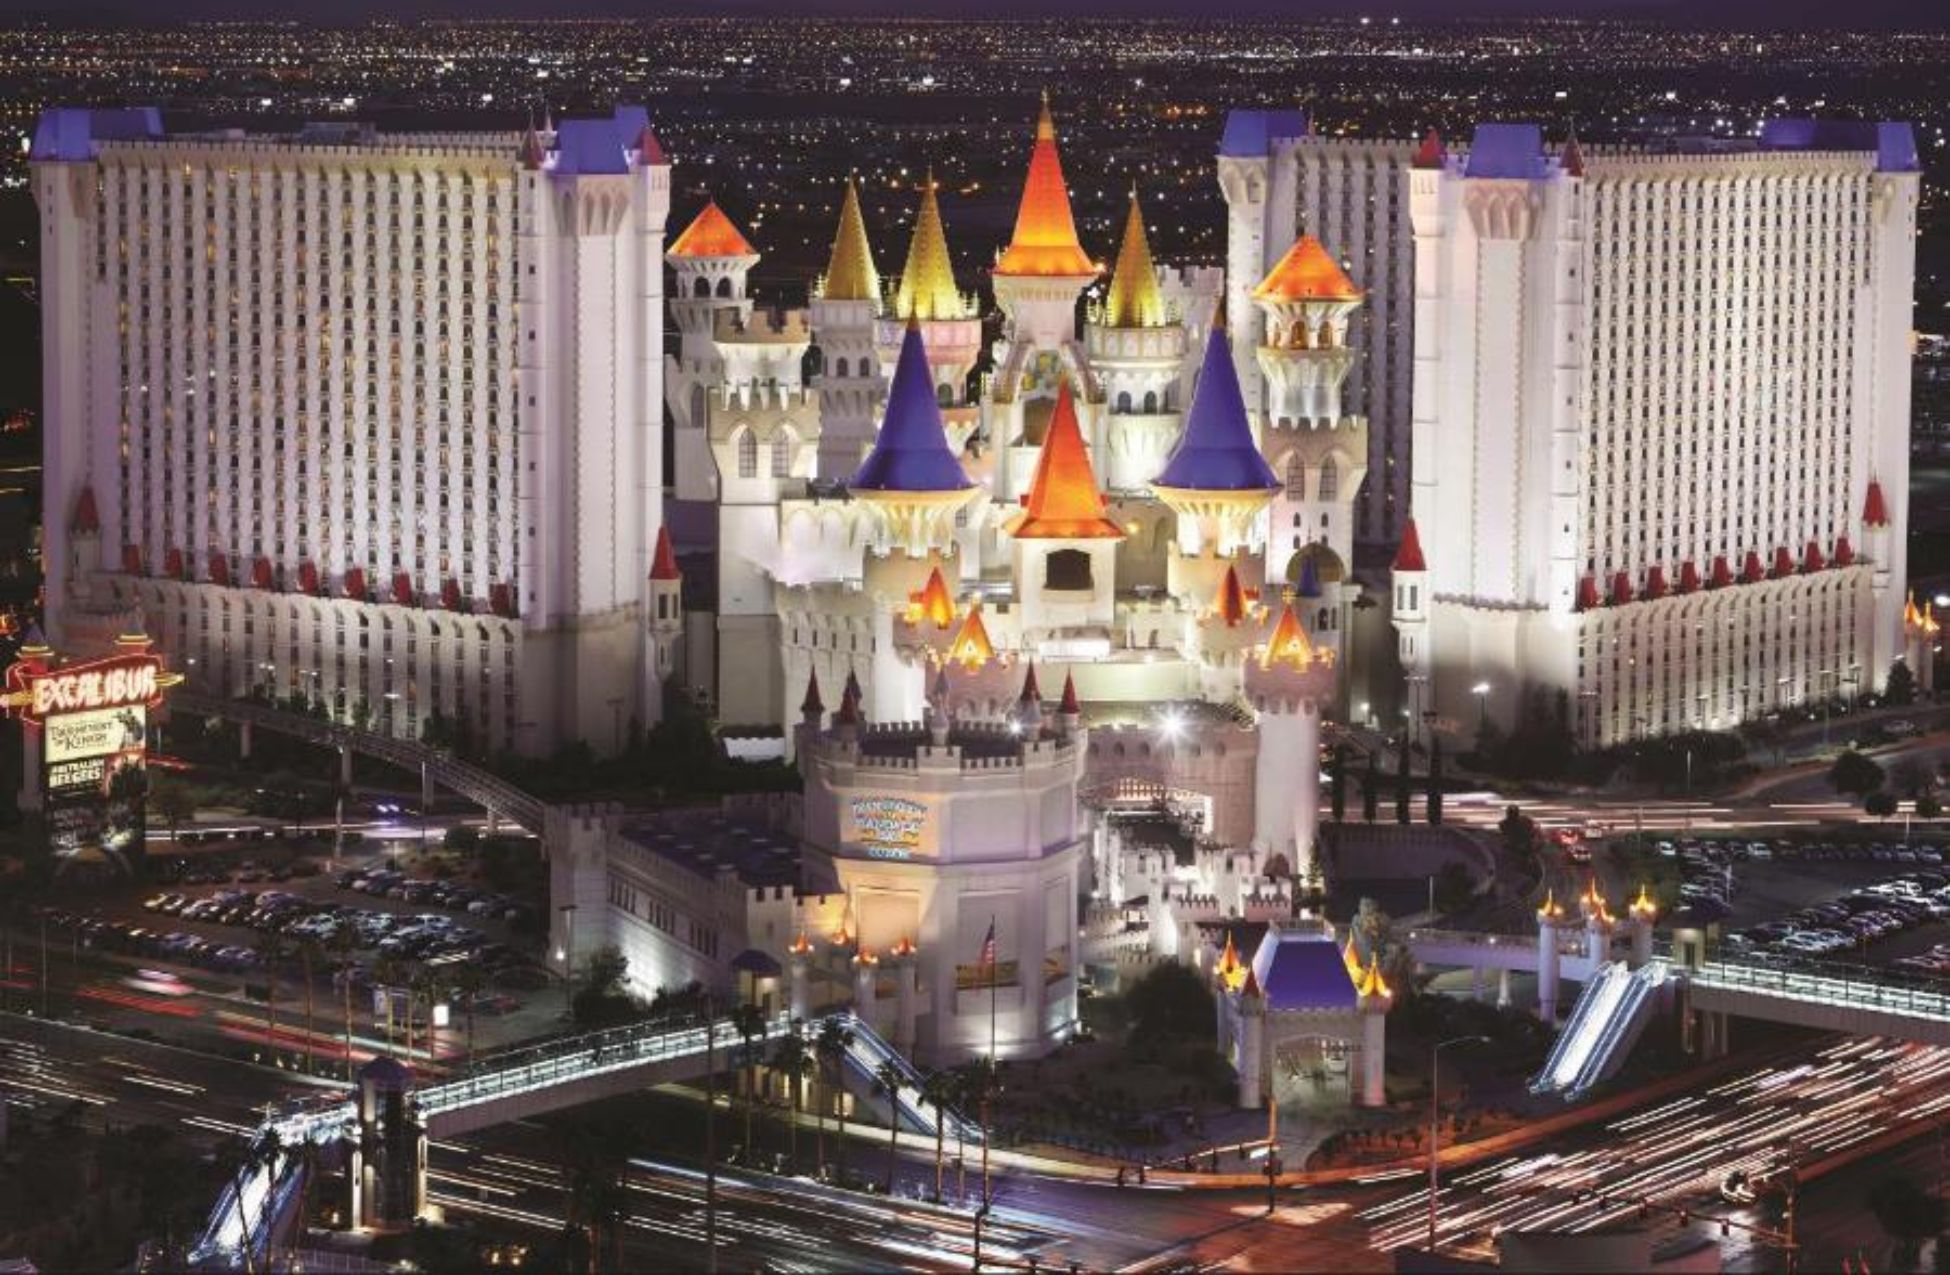 Excalibur Hotel And Casino - Best Hotels In Las Vegas